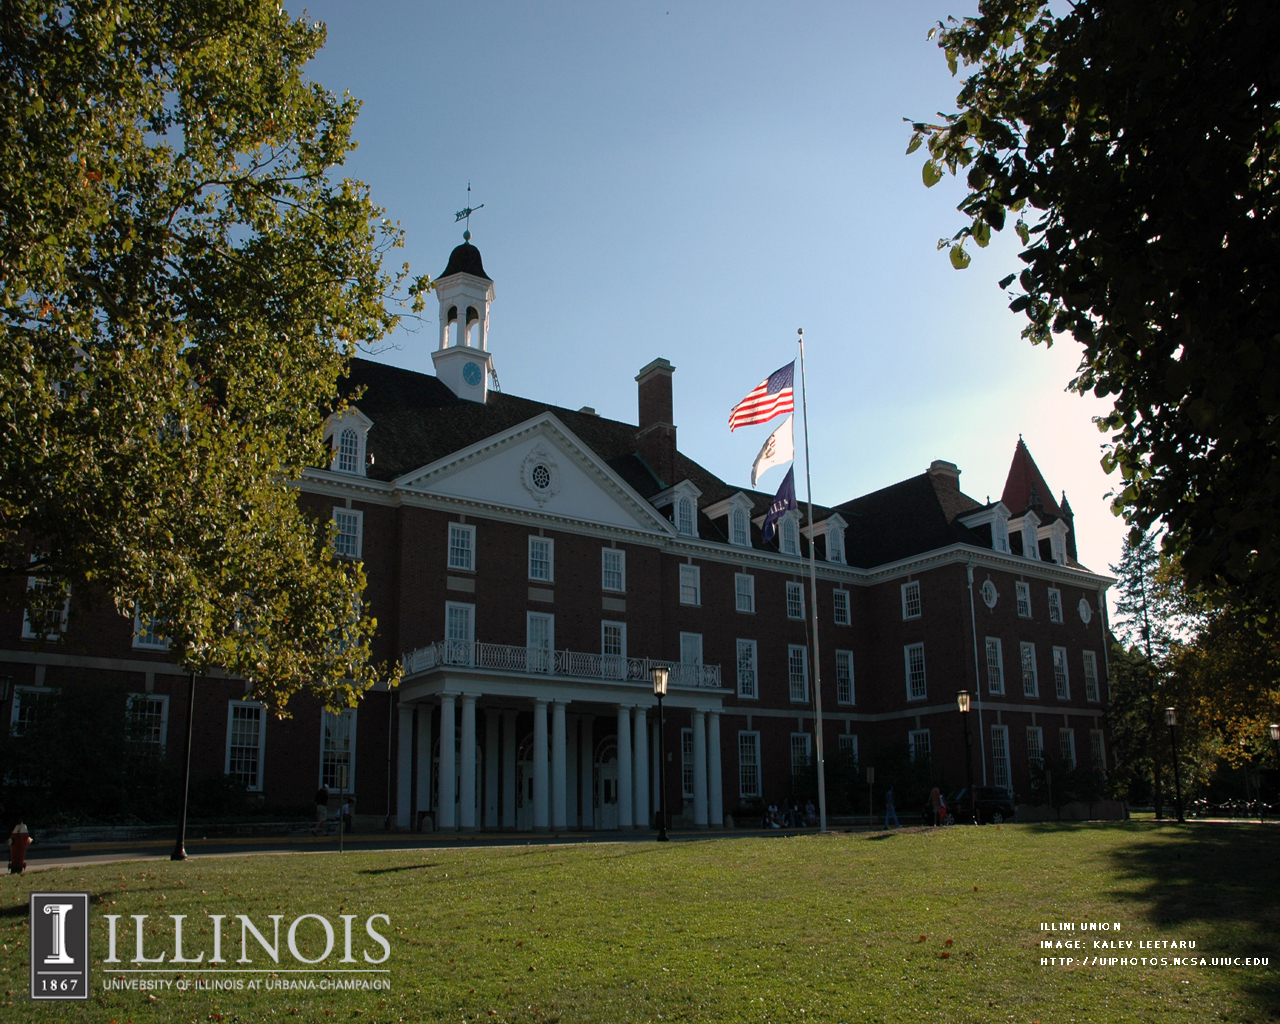 Illini Union: UIHistories Project Virtual Tour at the University of Illinois